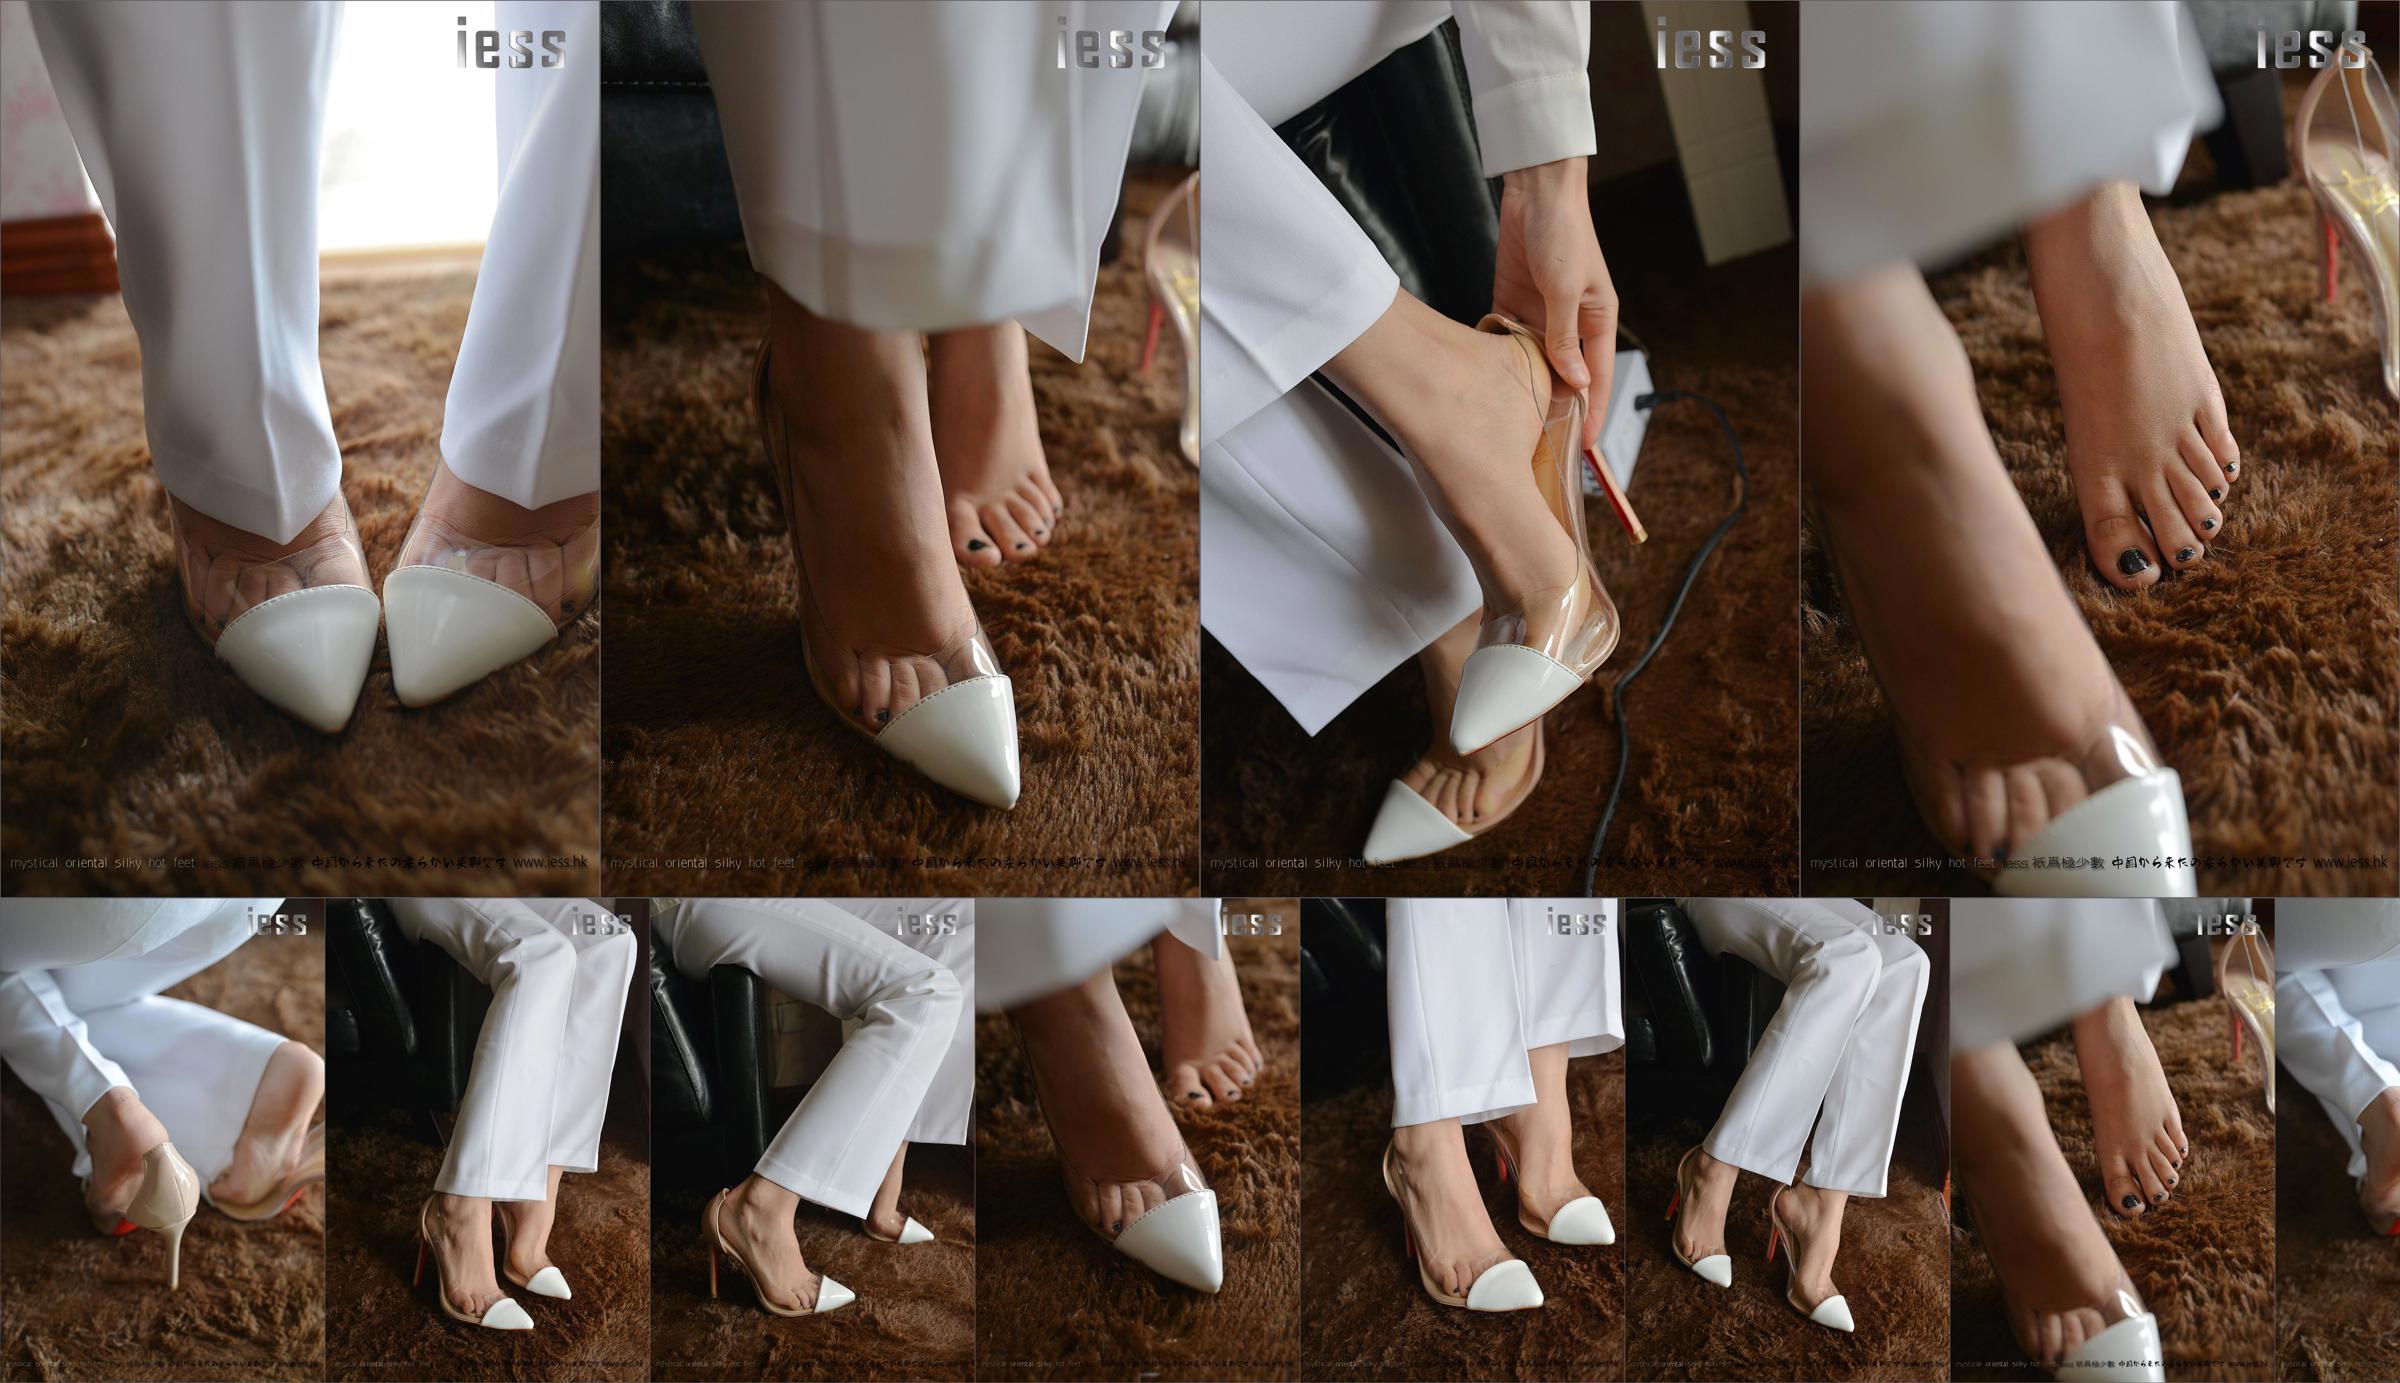 Silky Foot Bento 058 Suspense "Collection-Bare Foot High Heels" [IESS Wei Si Fun Xiang] No.4ba9de Page 3